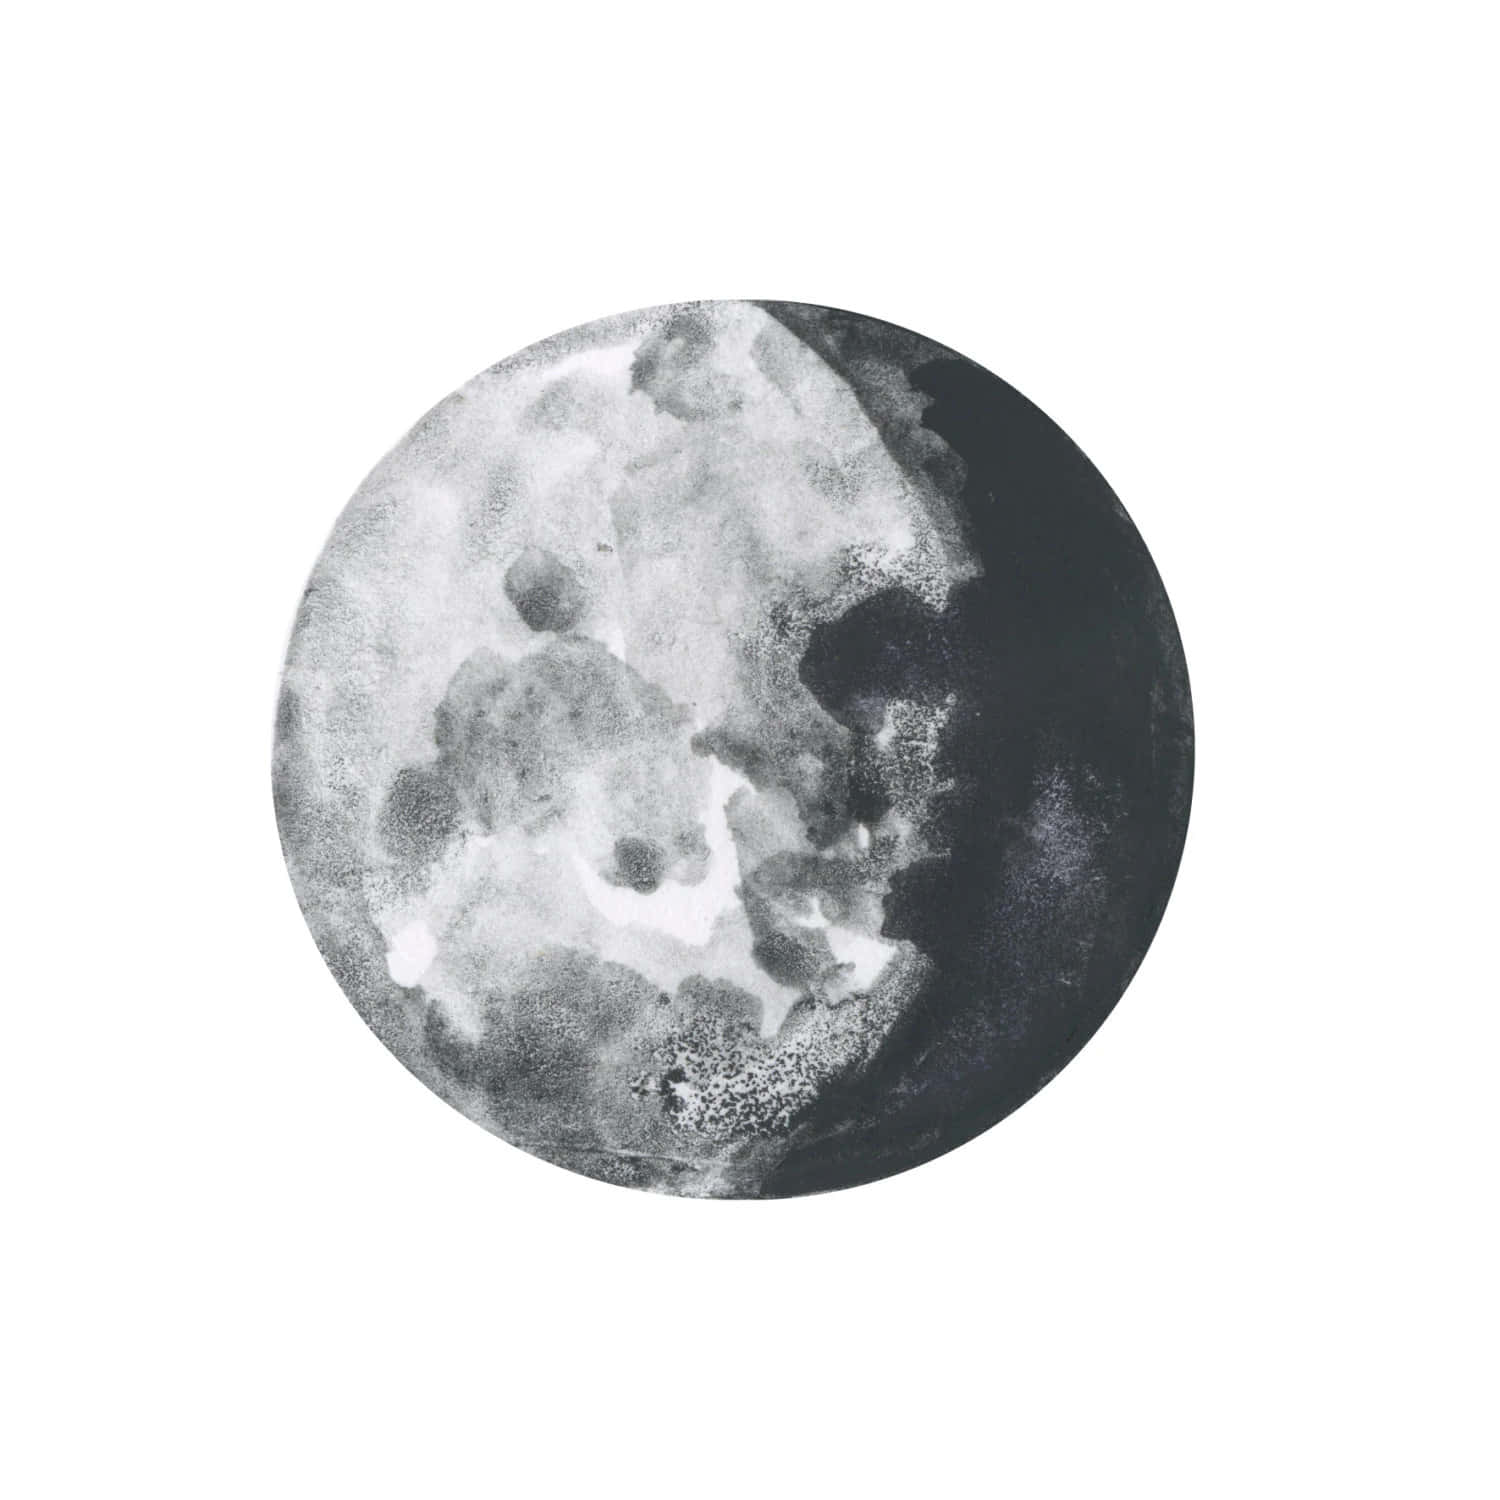 Waning Gibbous Moon Phase Wallpaper